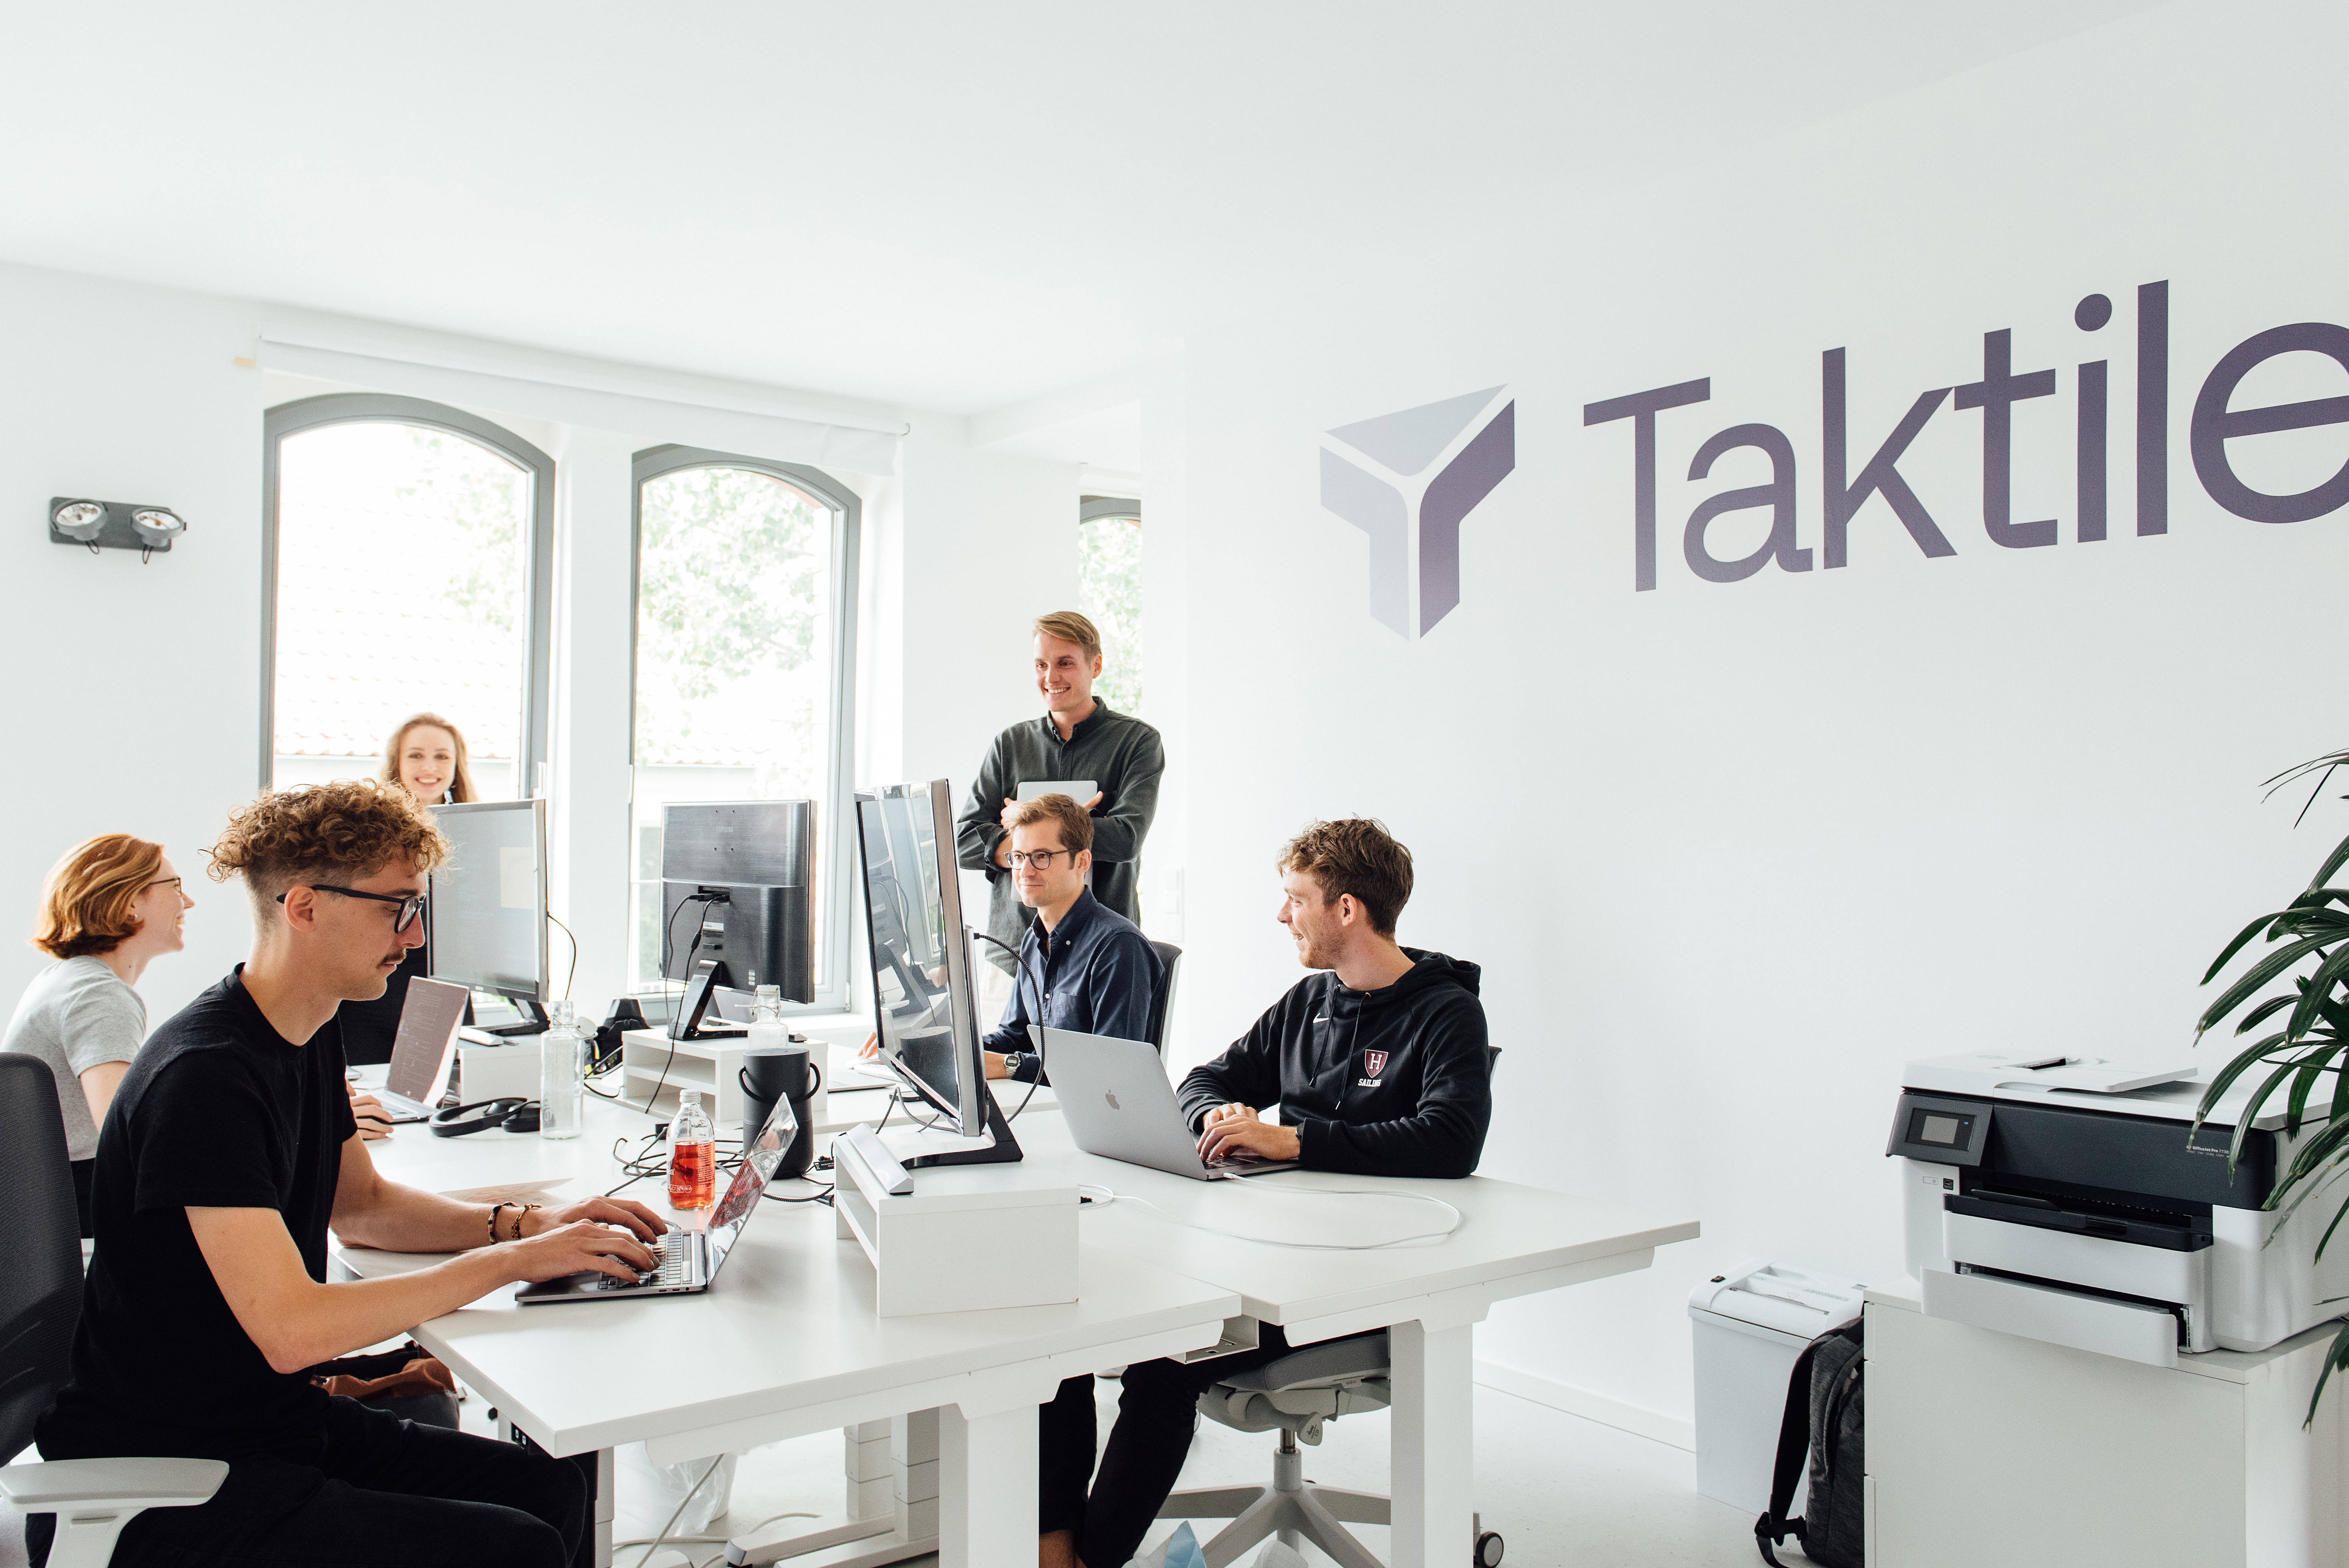 Taktile raises $20M to help fintech companies test and deploy decision-making models